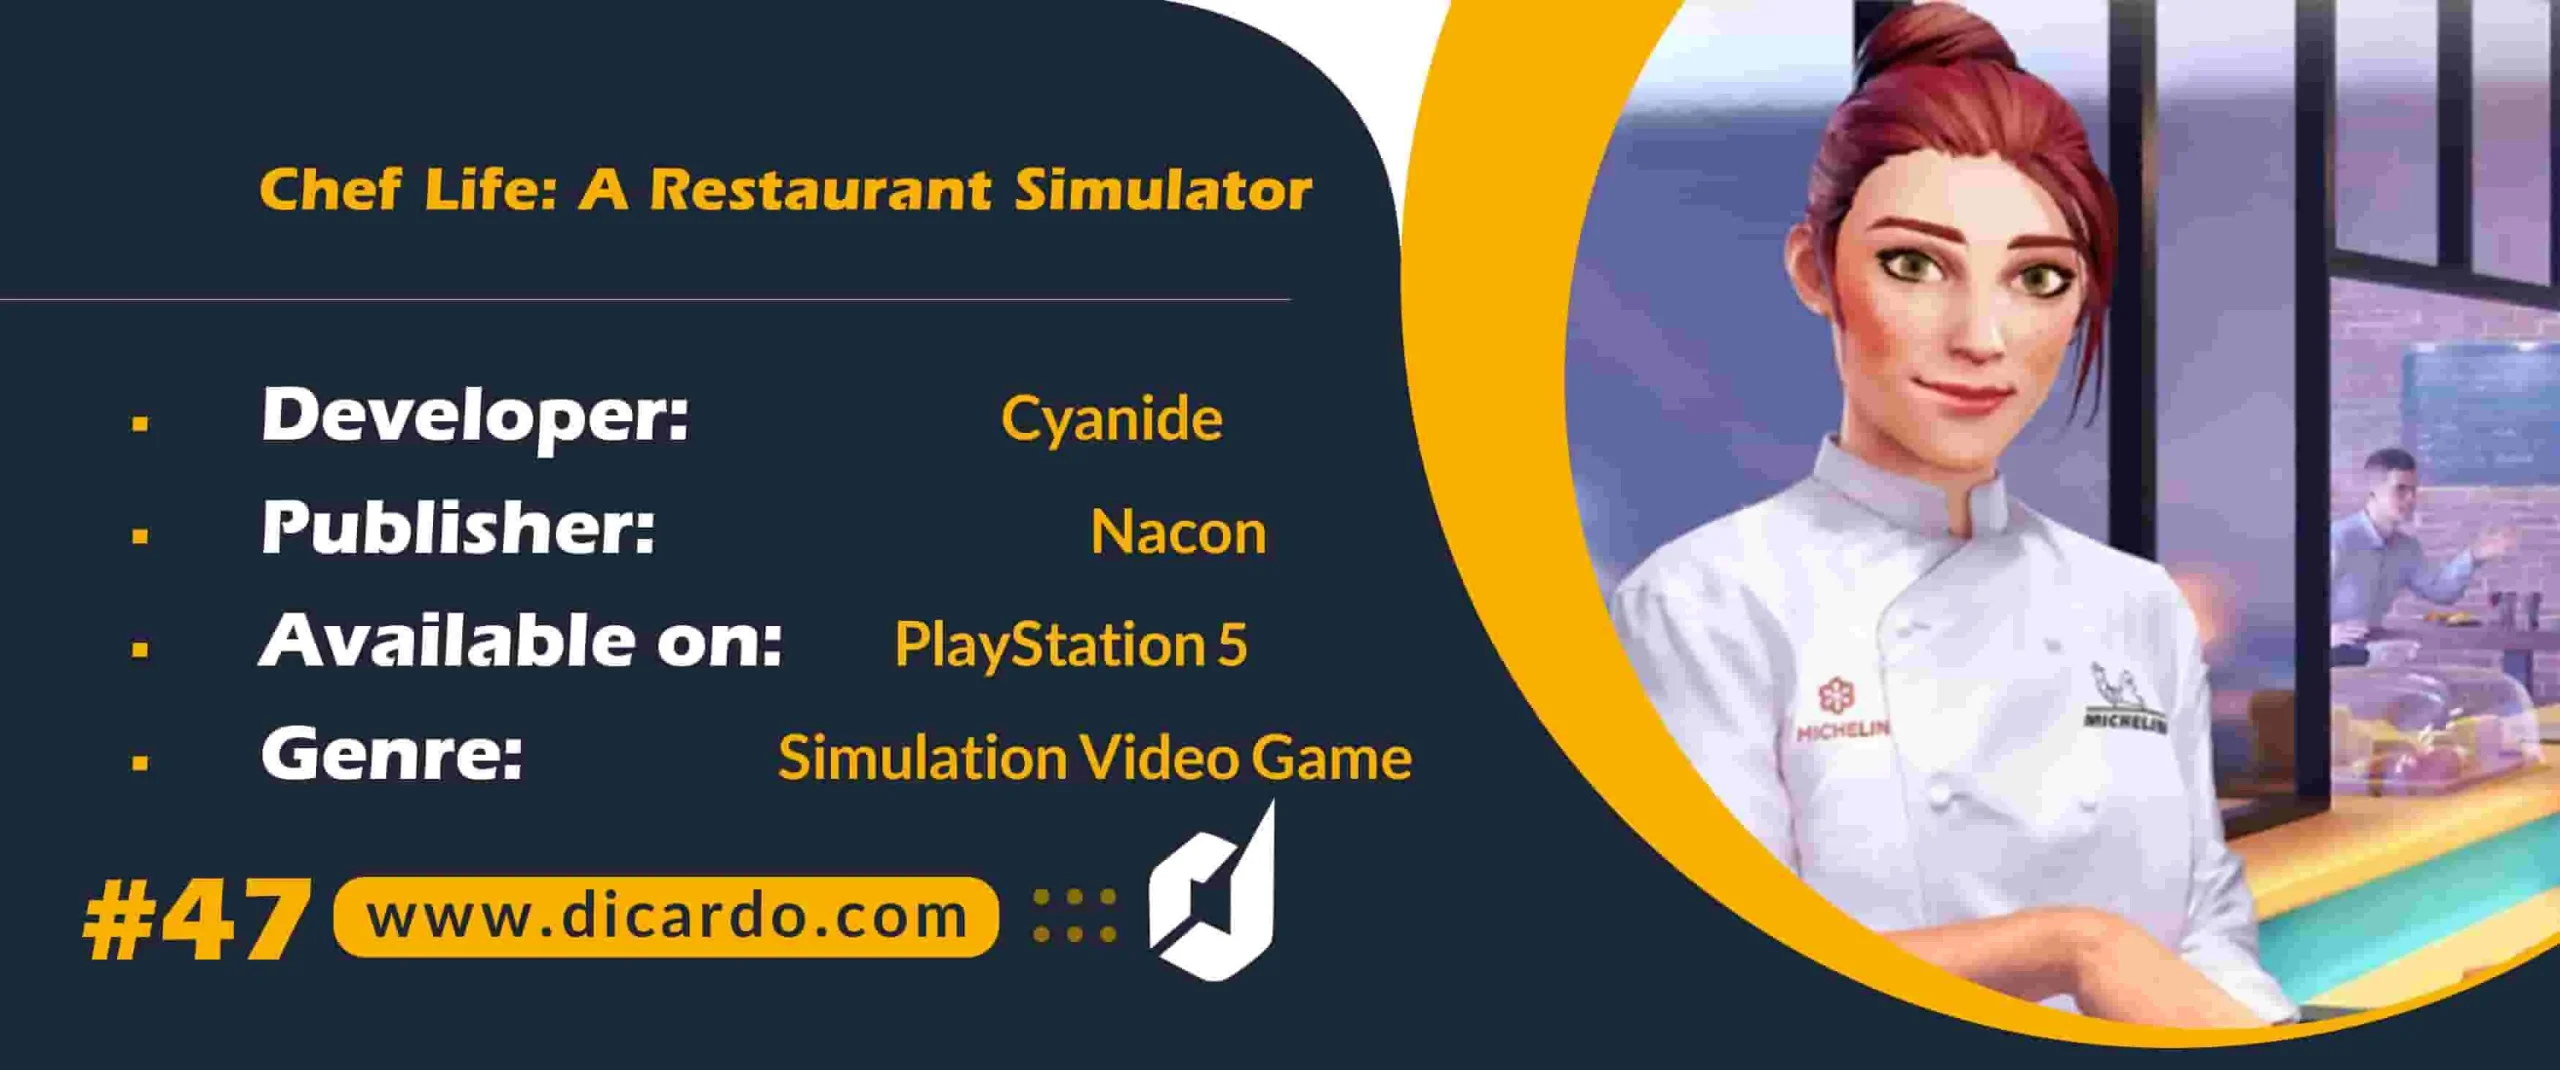 #47 چف لایف ا رستورانت سیمولیشر Chef Life: A Restaurant Simulator